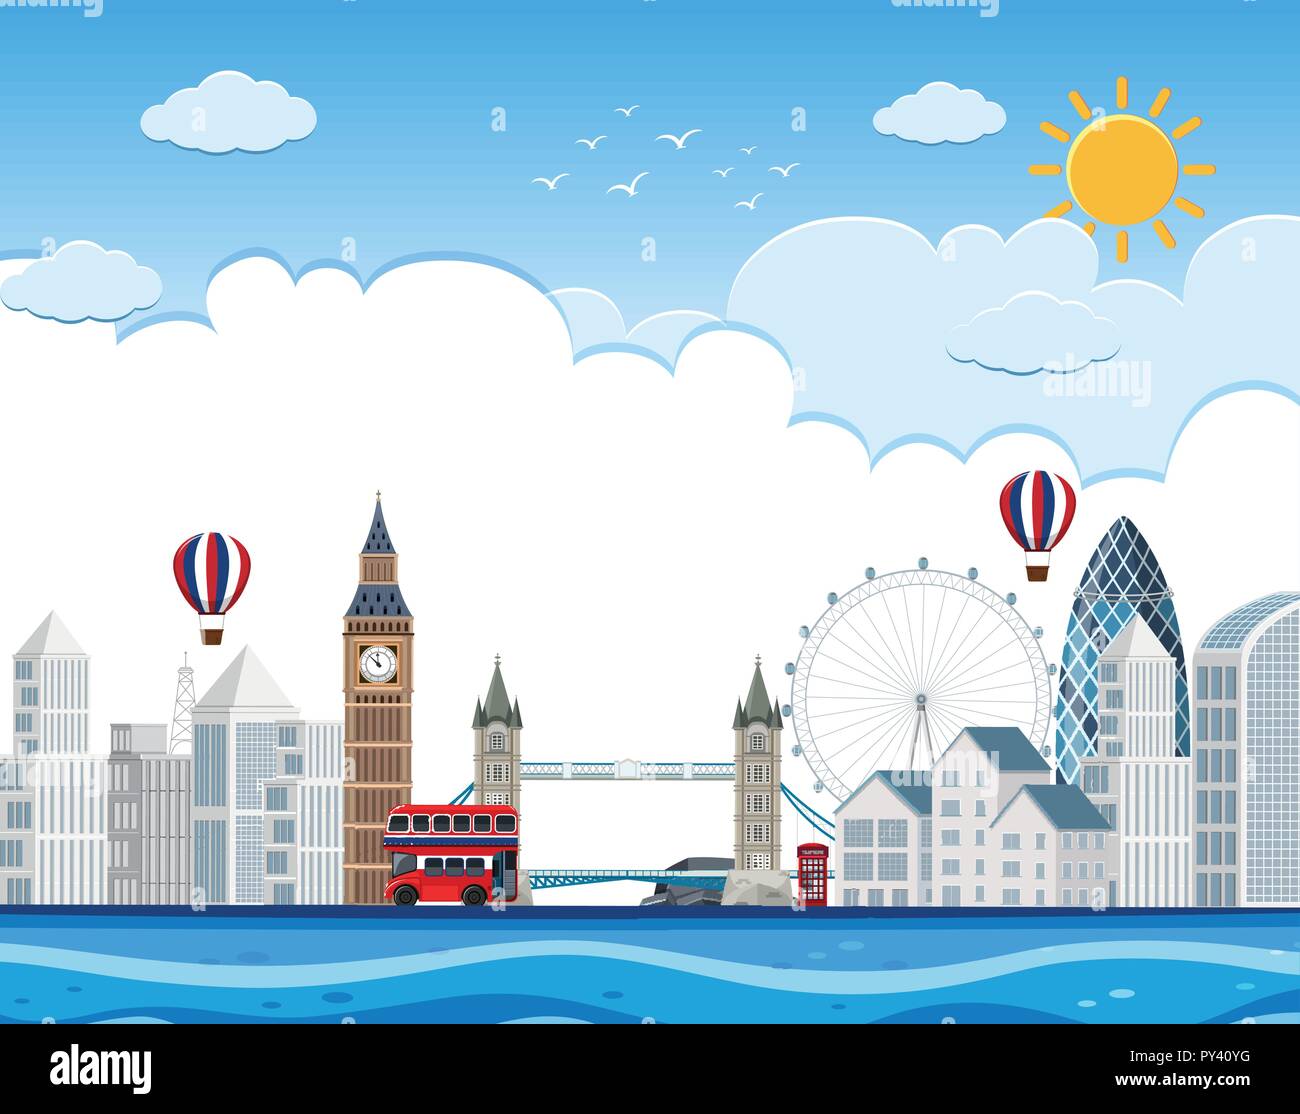 London cityscape on river illustration Stock Vector